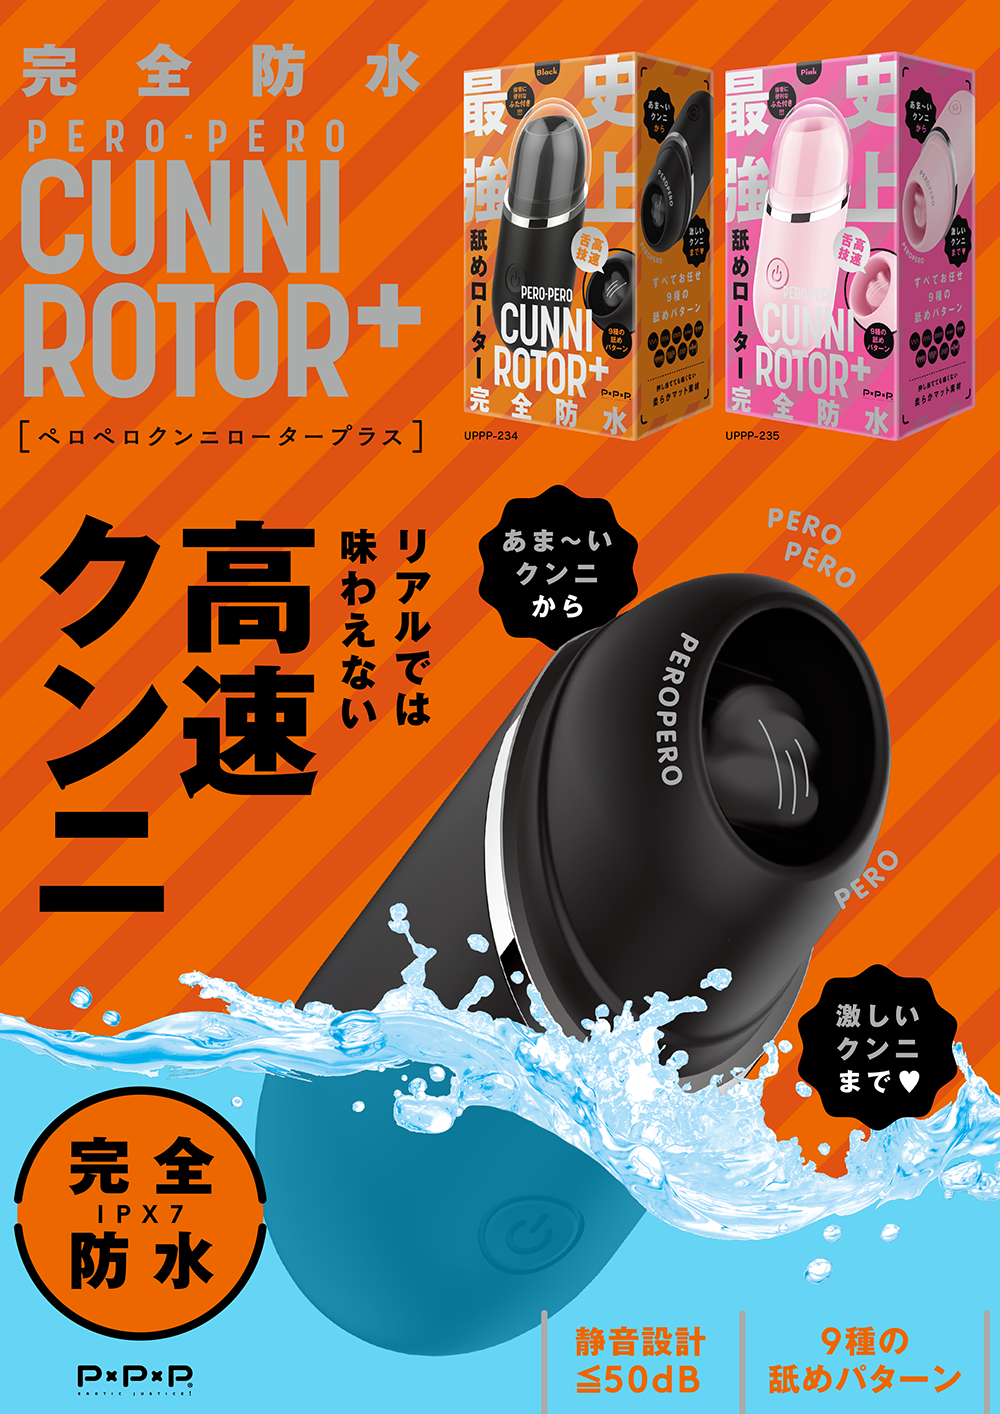 Completely waterproof PERO-PERO CUNNI ROTOR + [Peropero Cunnilingus Rotor Plus] pink Image 1